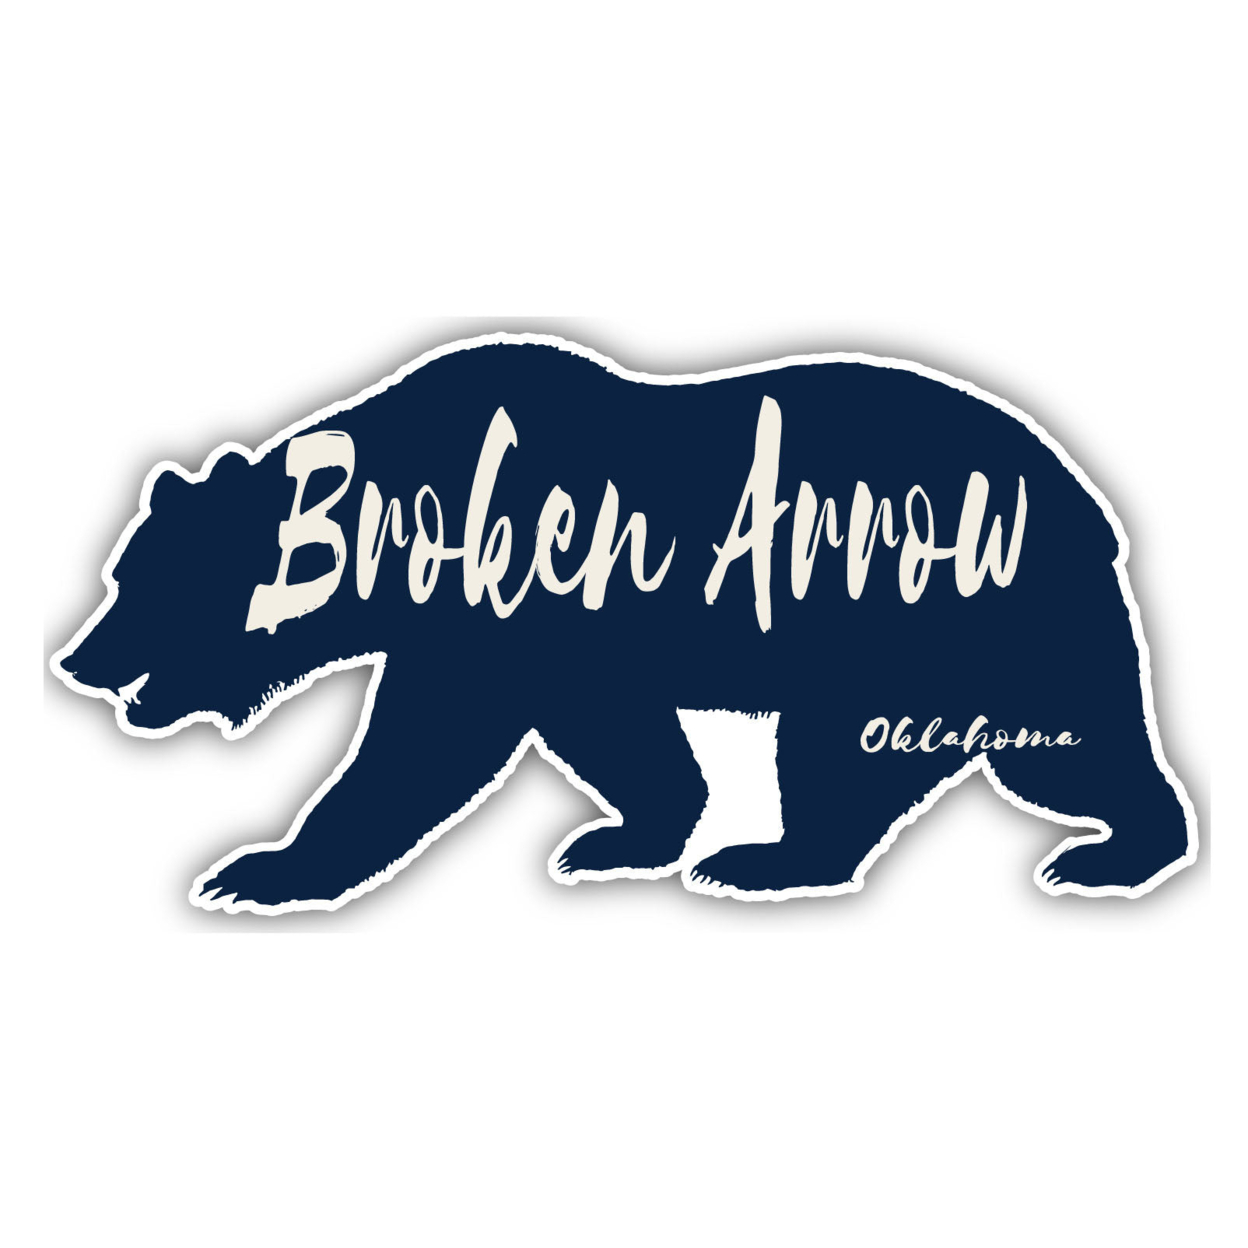 Broken Arrow Oklahoma Souvenir Decorative Stickers (Choose Theme And Size) - Single Unit, 12-Inch, Great Outdoors